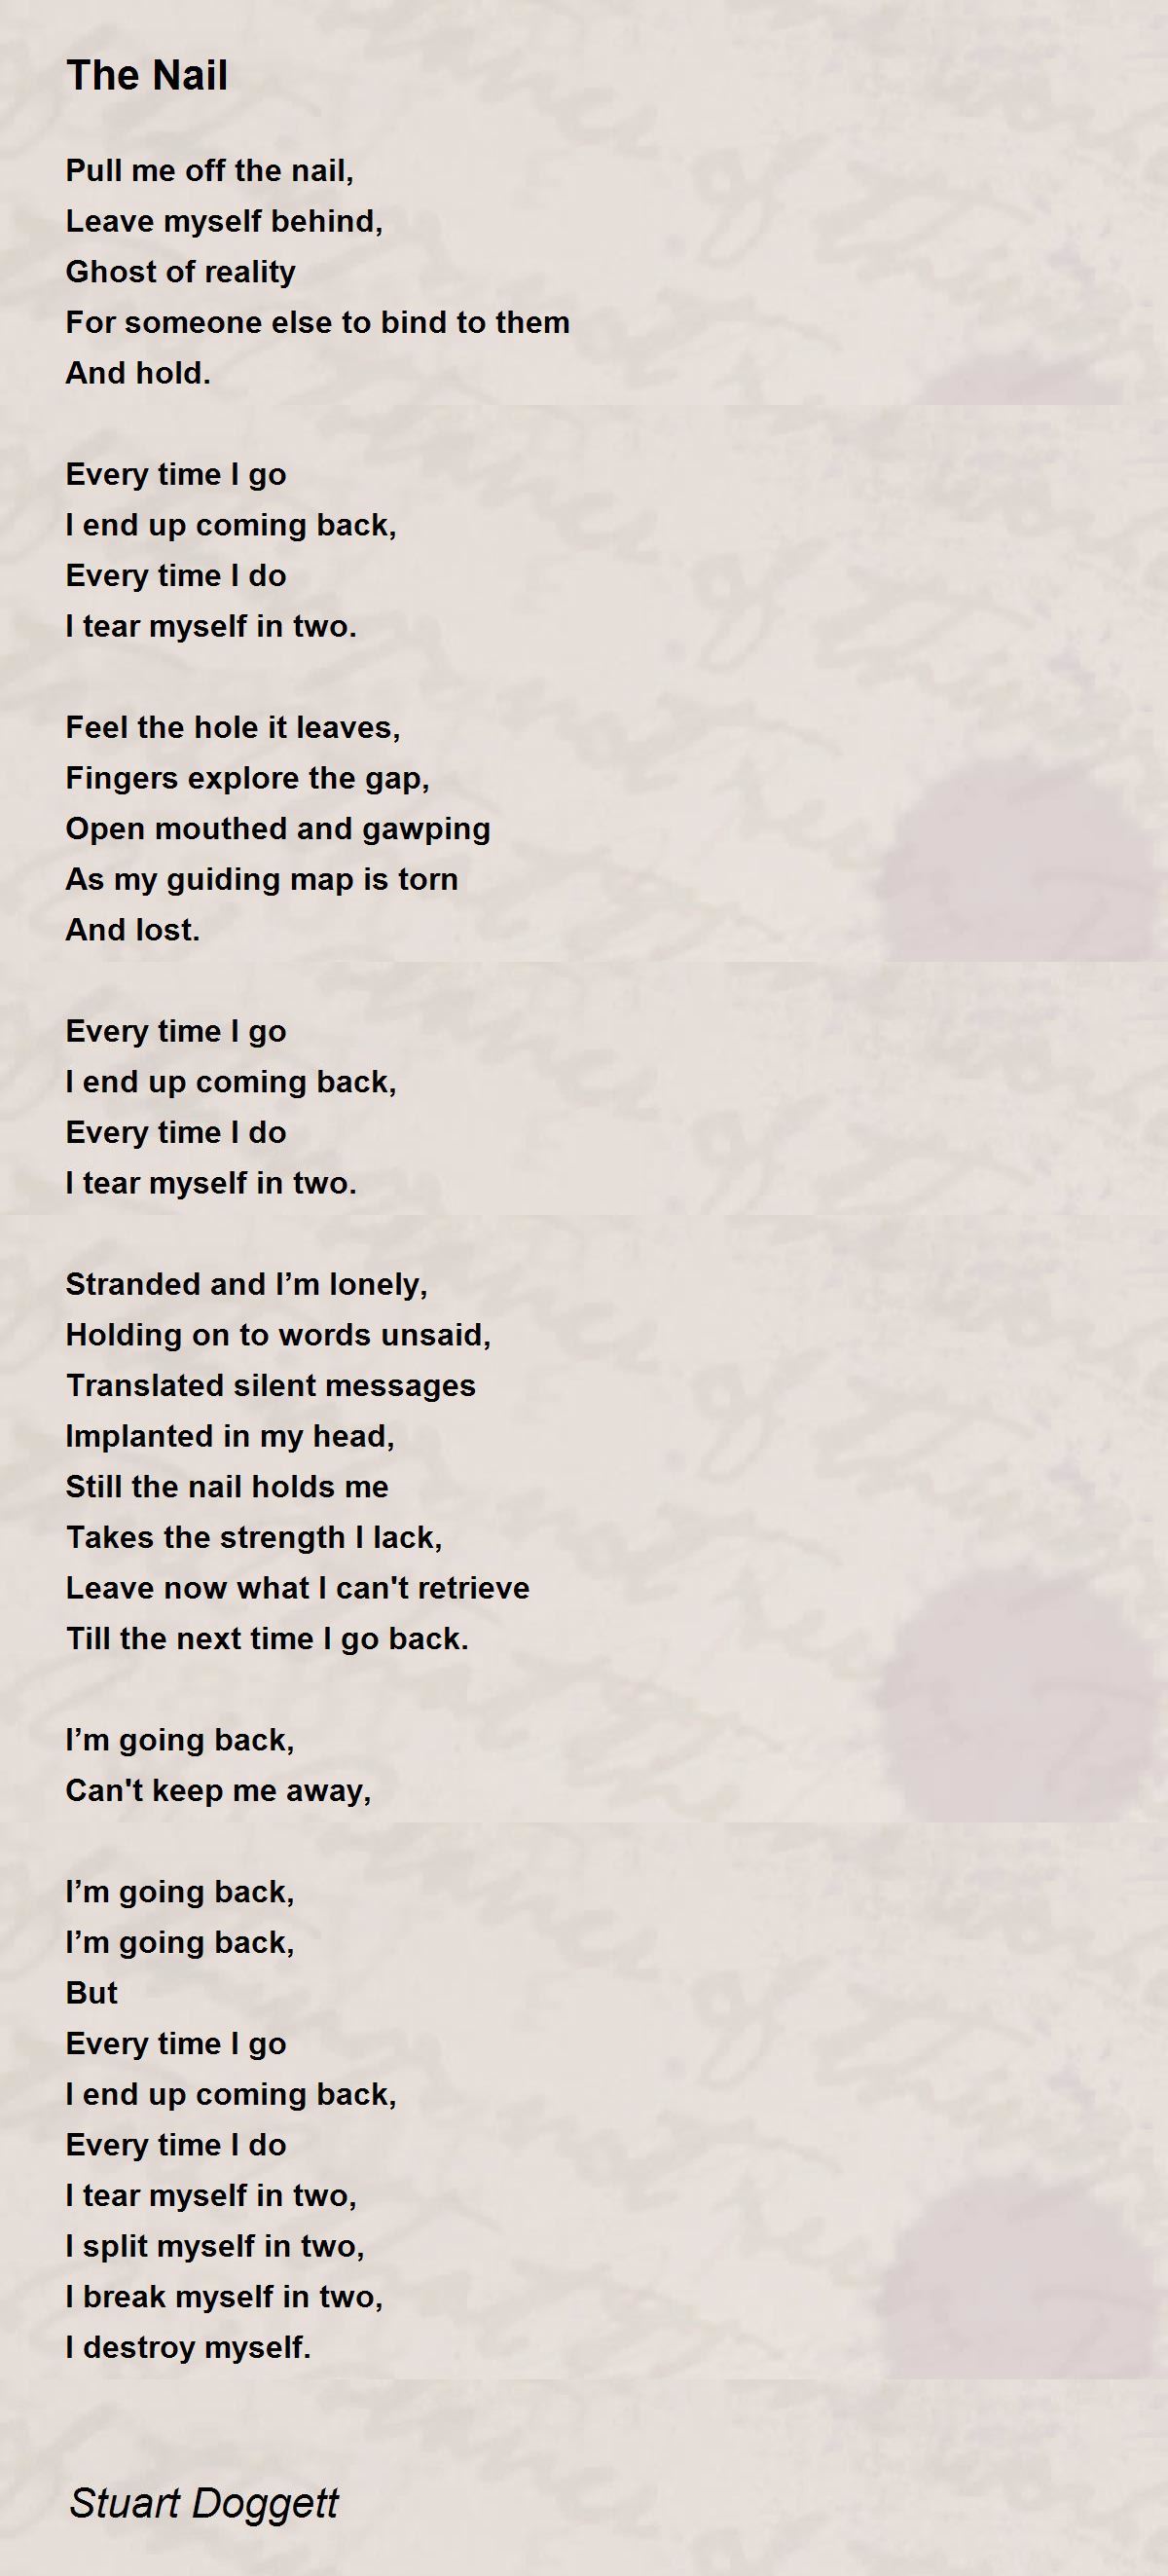 Her Nails Poem by Edward Powys Mathers (as Translator)